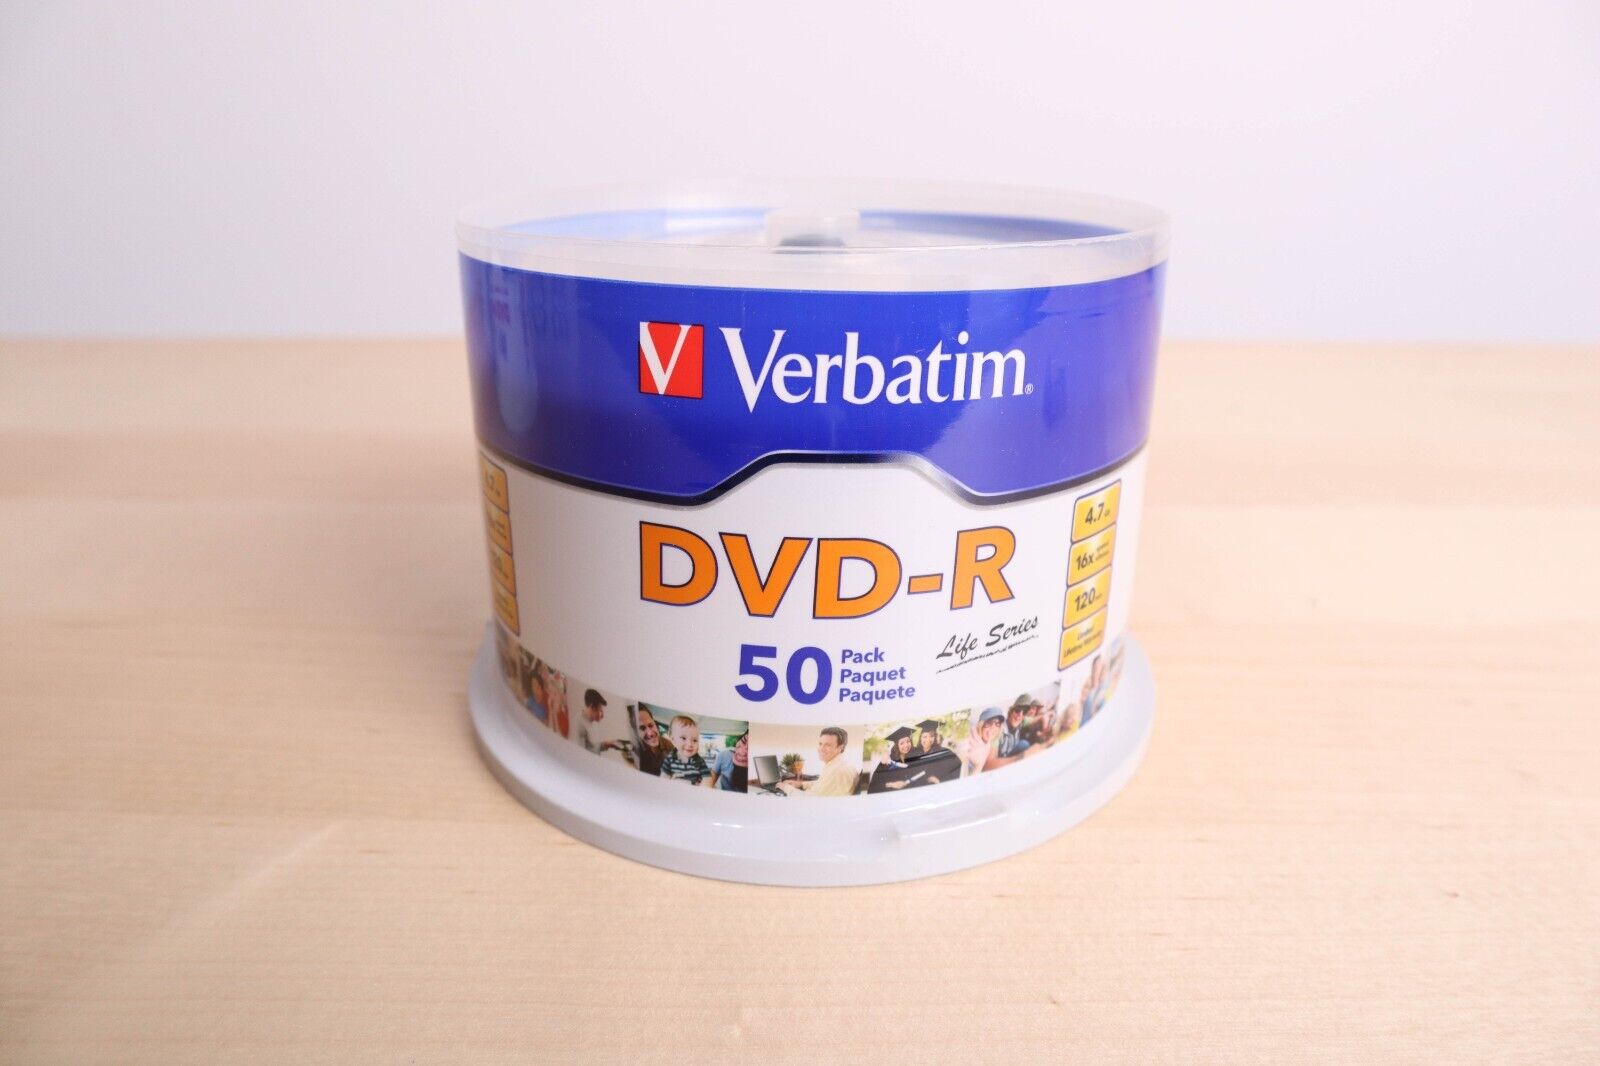 Verbatim Life Series DVD-R Disc Spindle, Pack Of 50, Set of 3